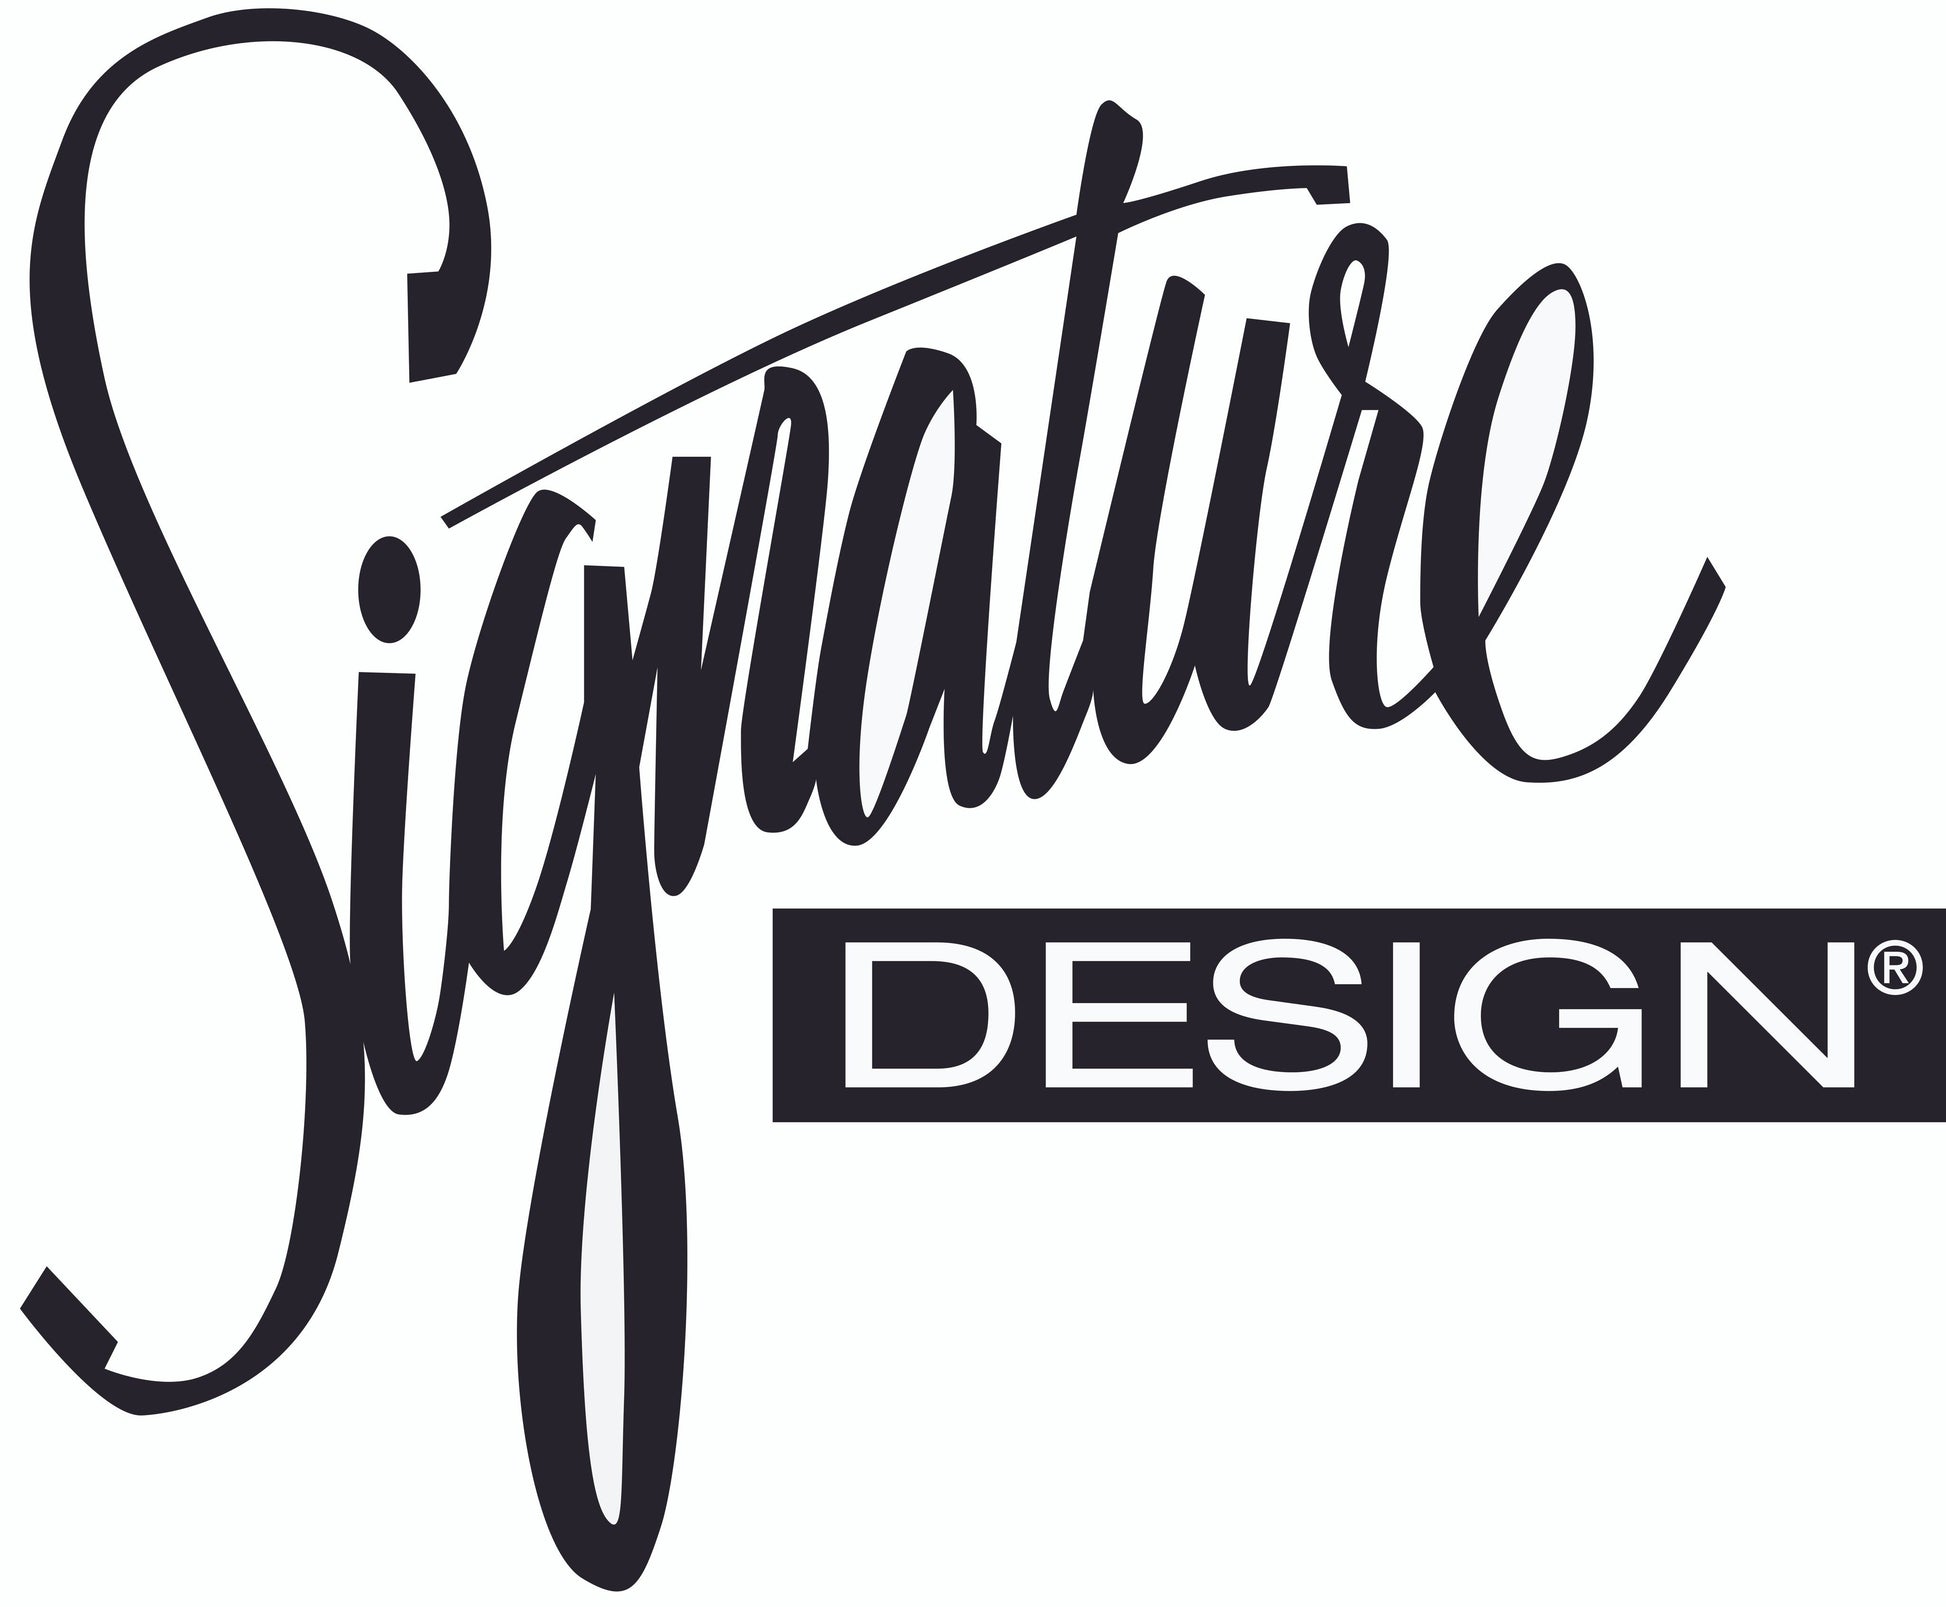 Media Full Comforter Set Signature Design by Ashley®